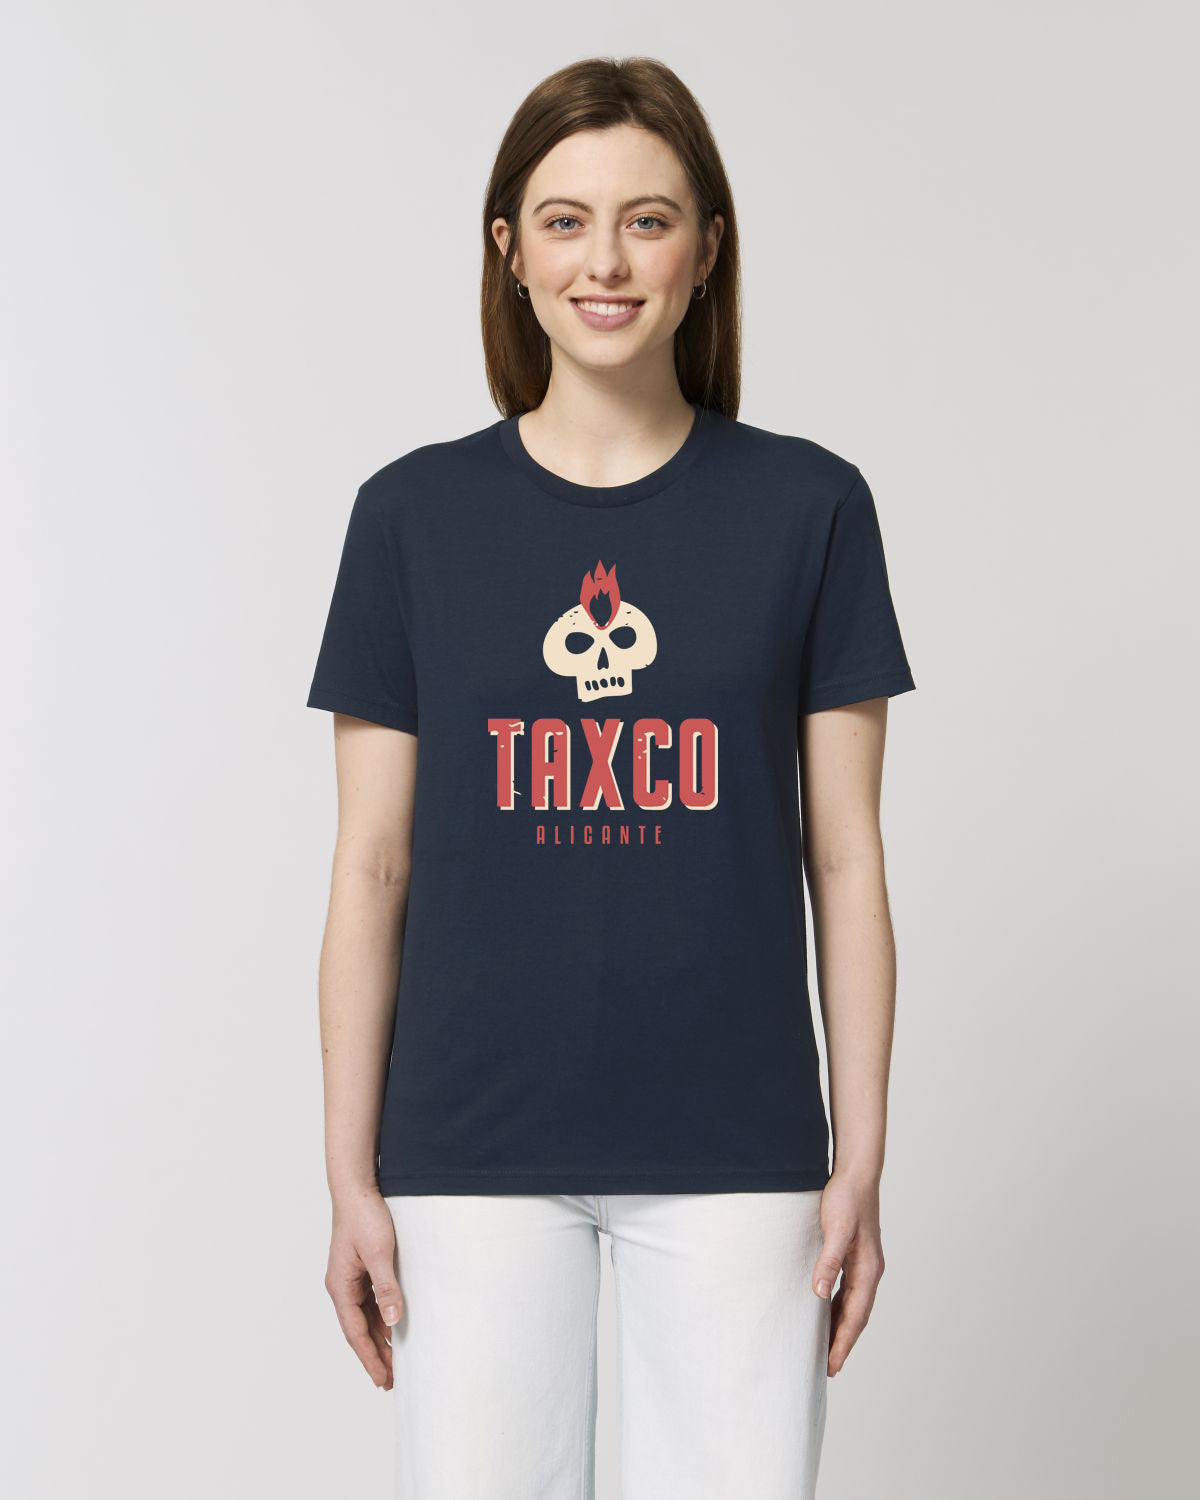 T-shirt Woman Taxco